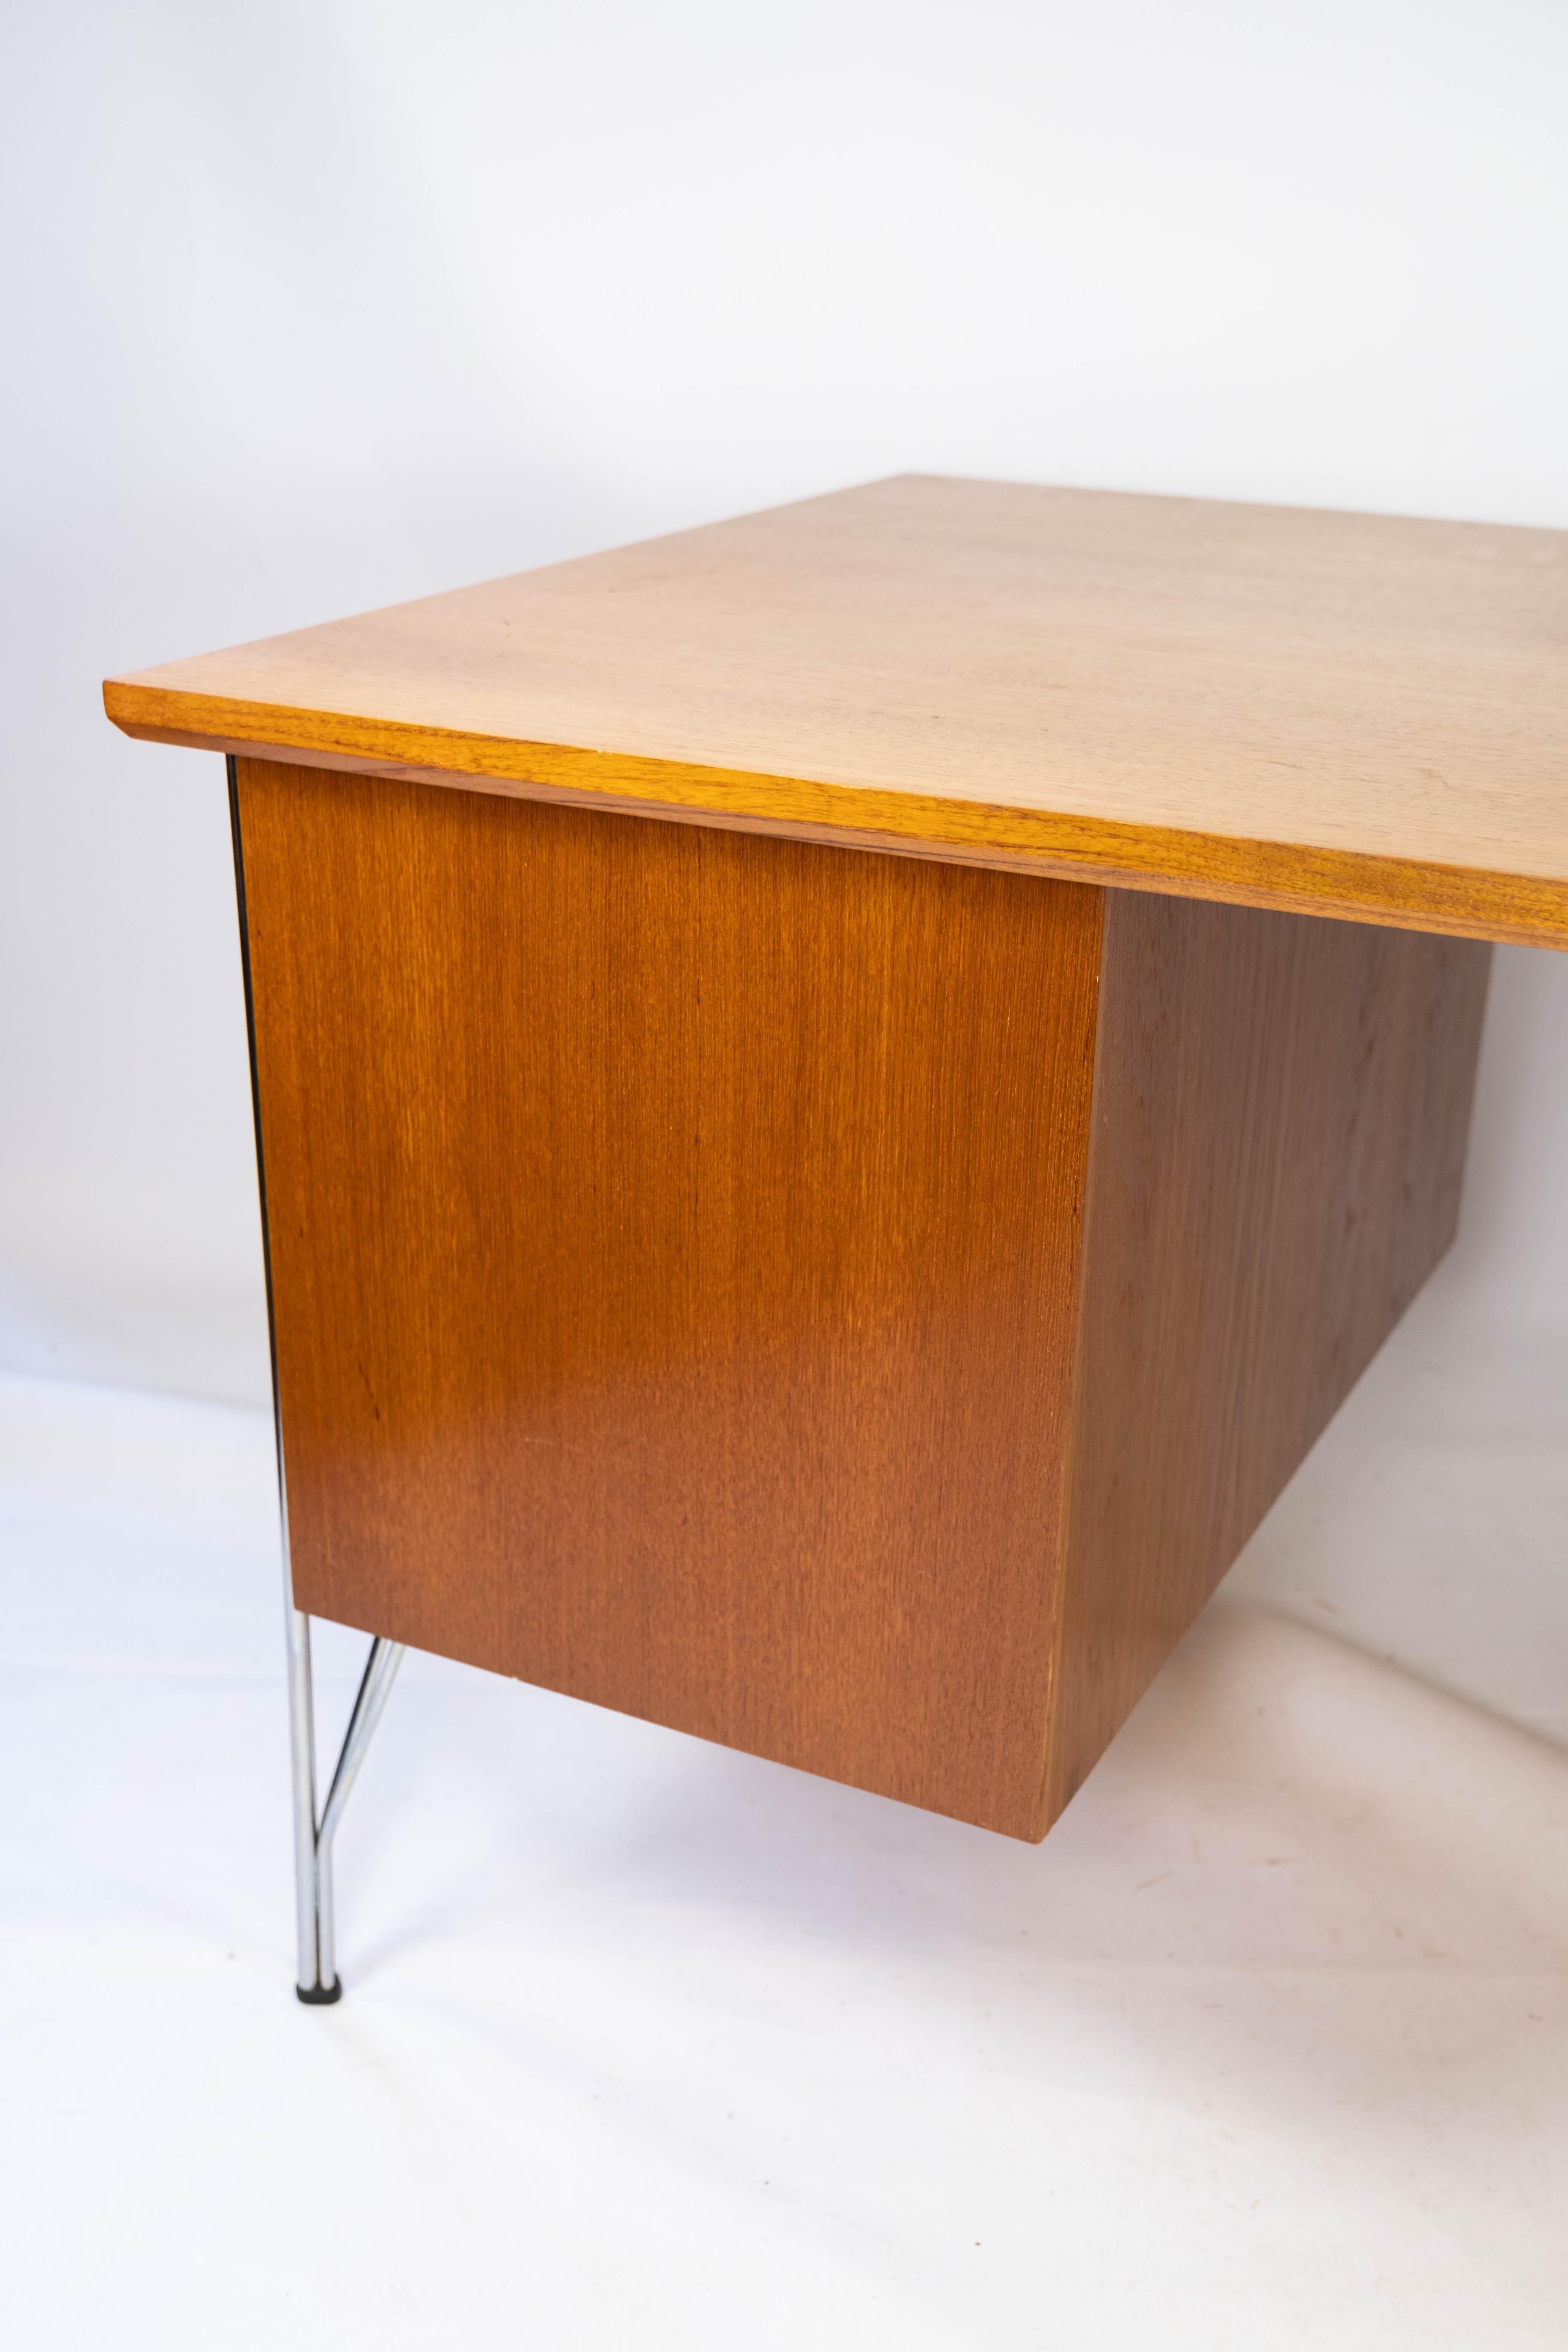 Desk in Teak of Danish Design from the 1970s For Sale 1